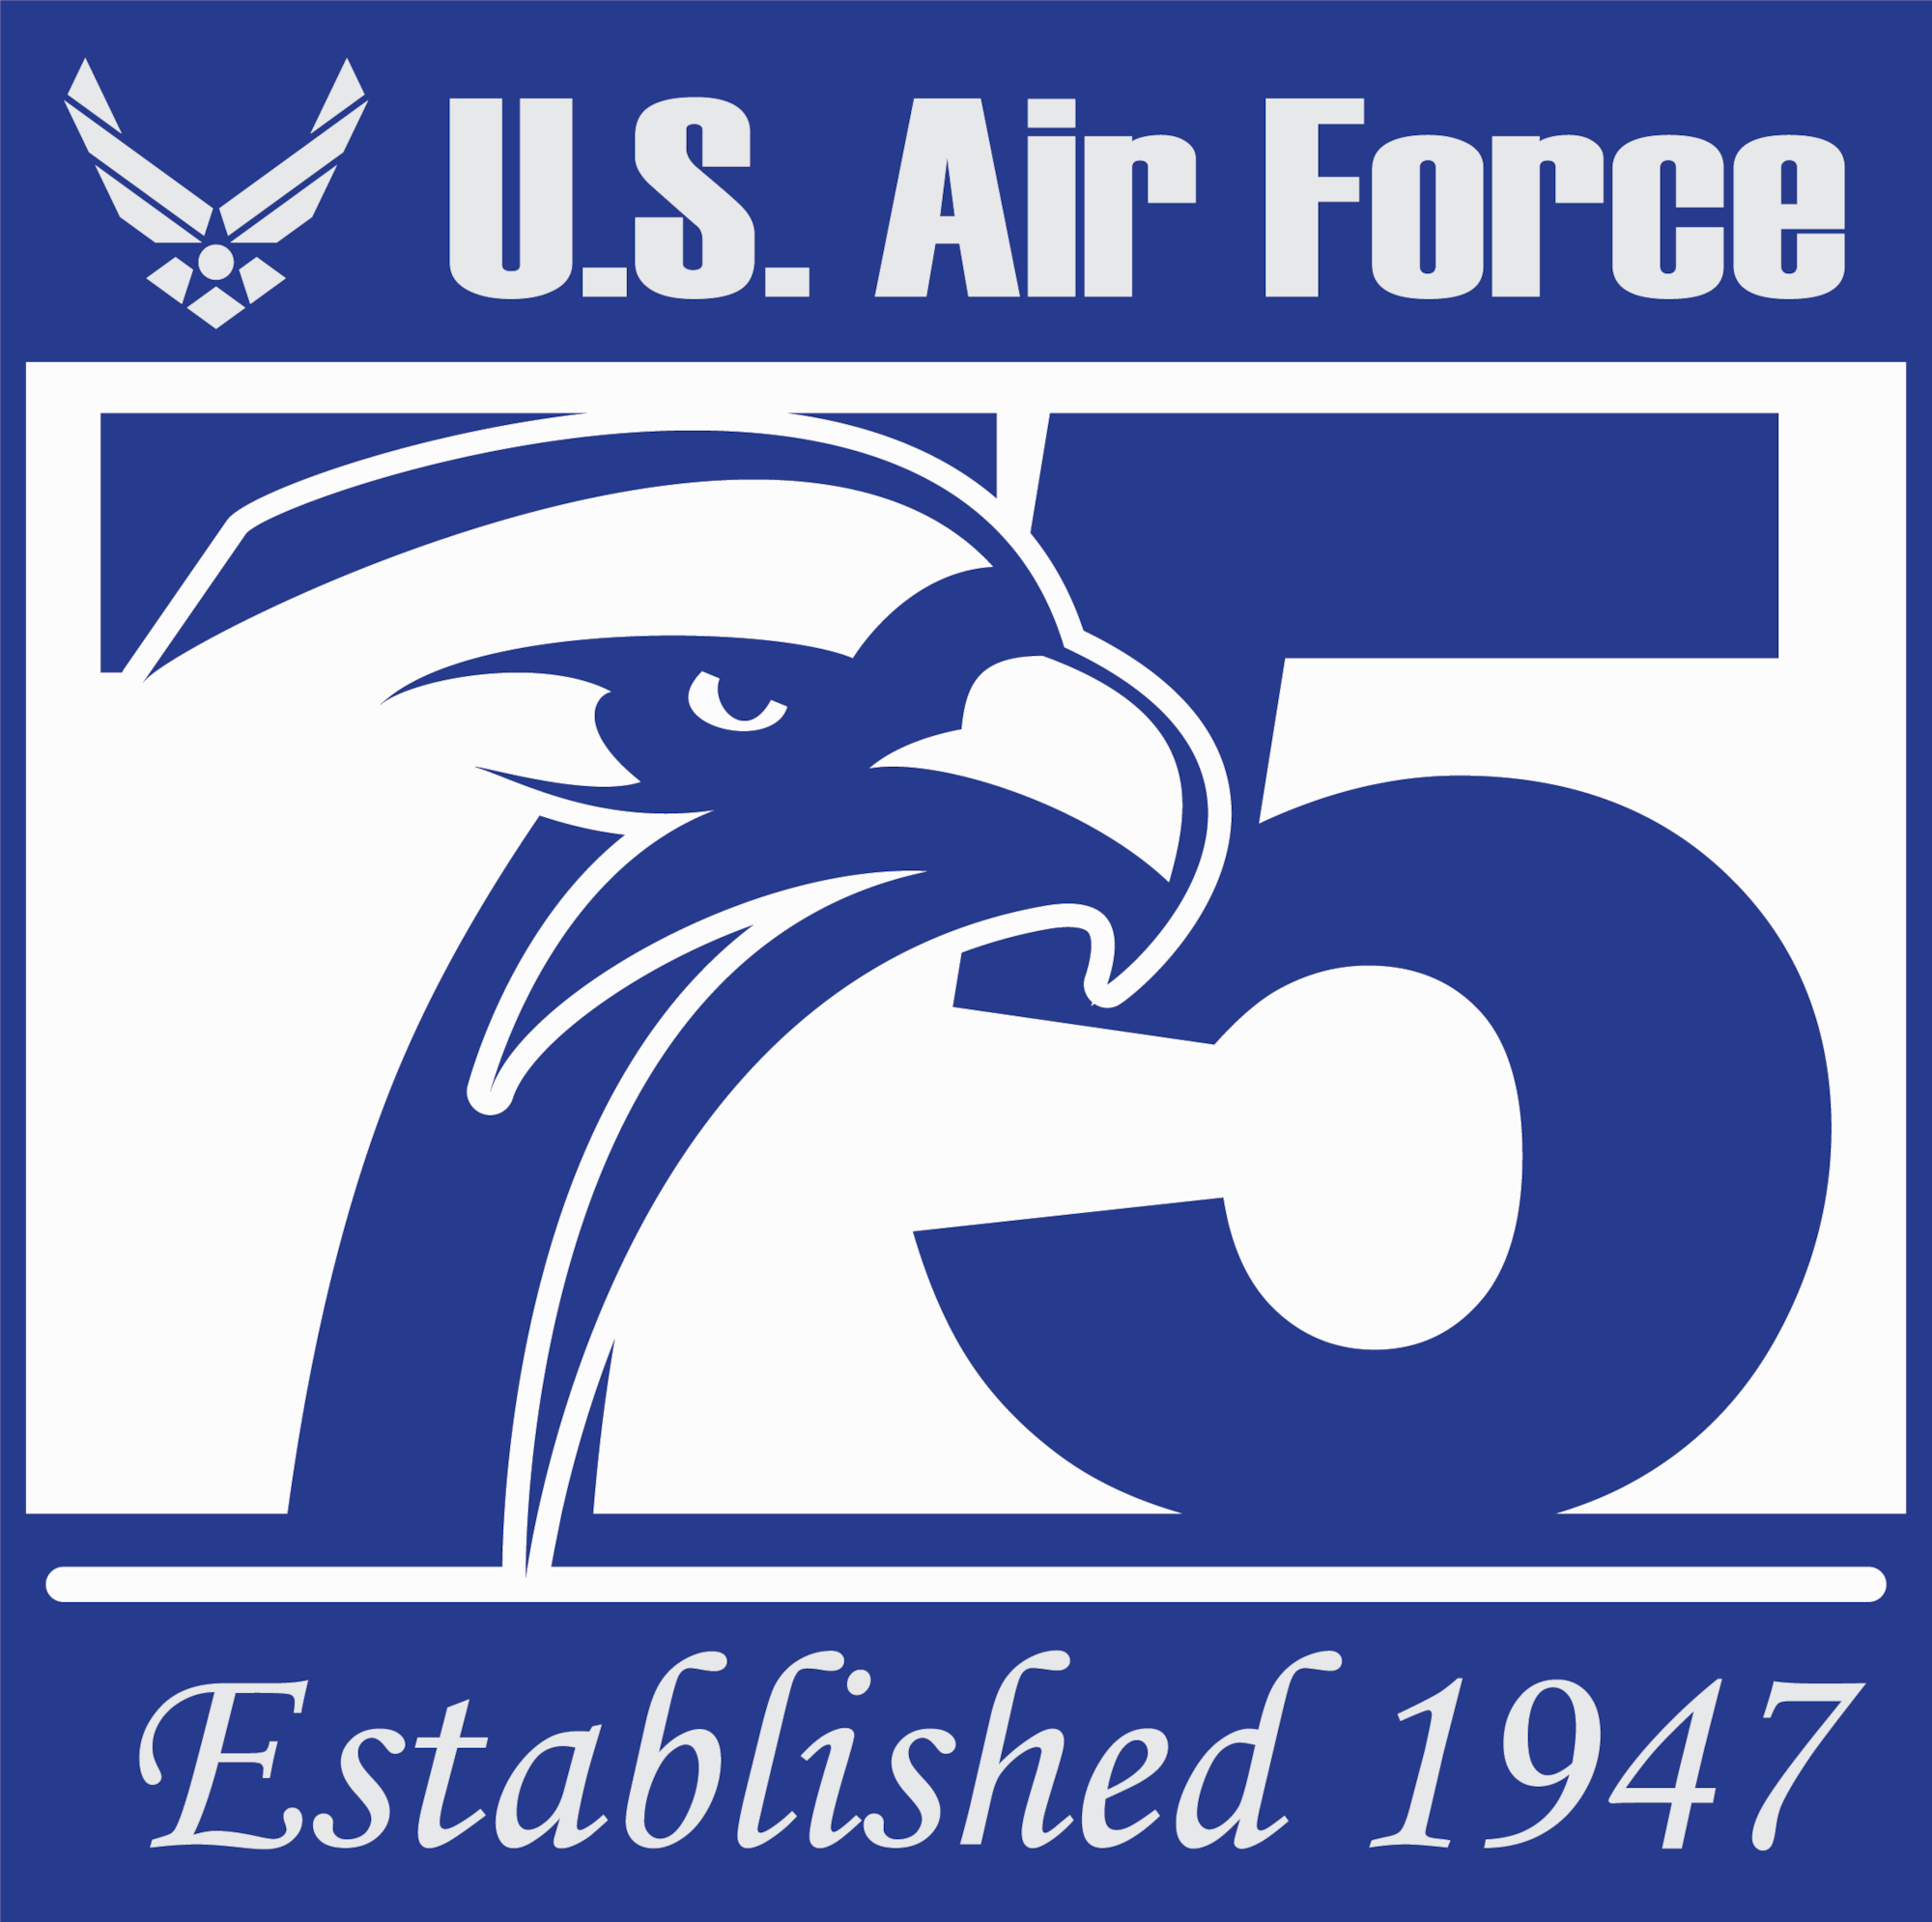 U.S. Air Force graphic 75th anniversary